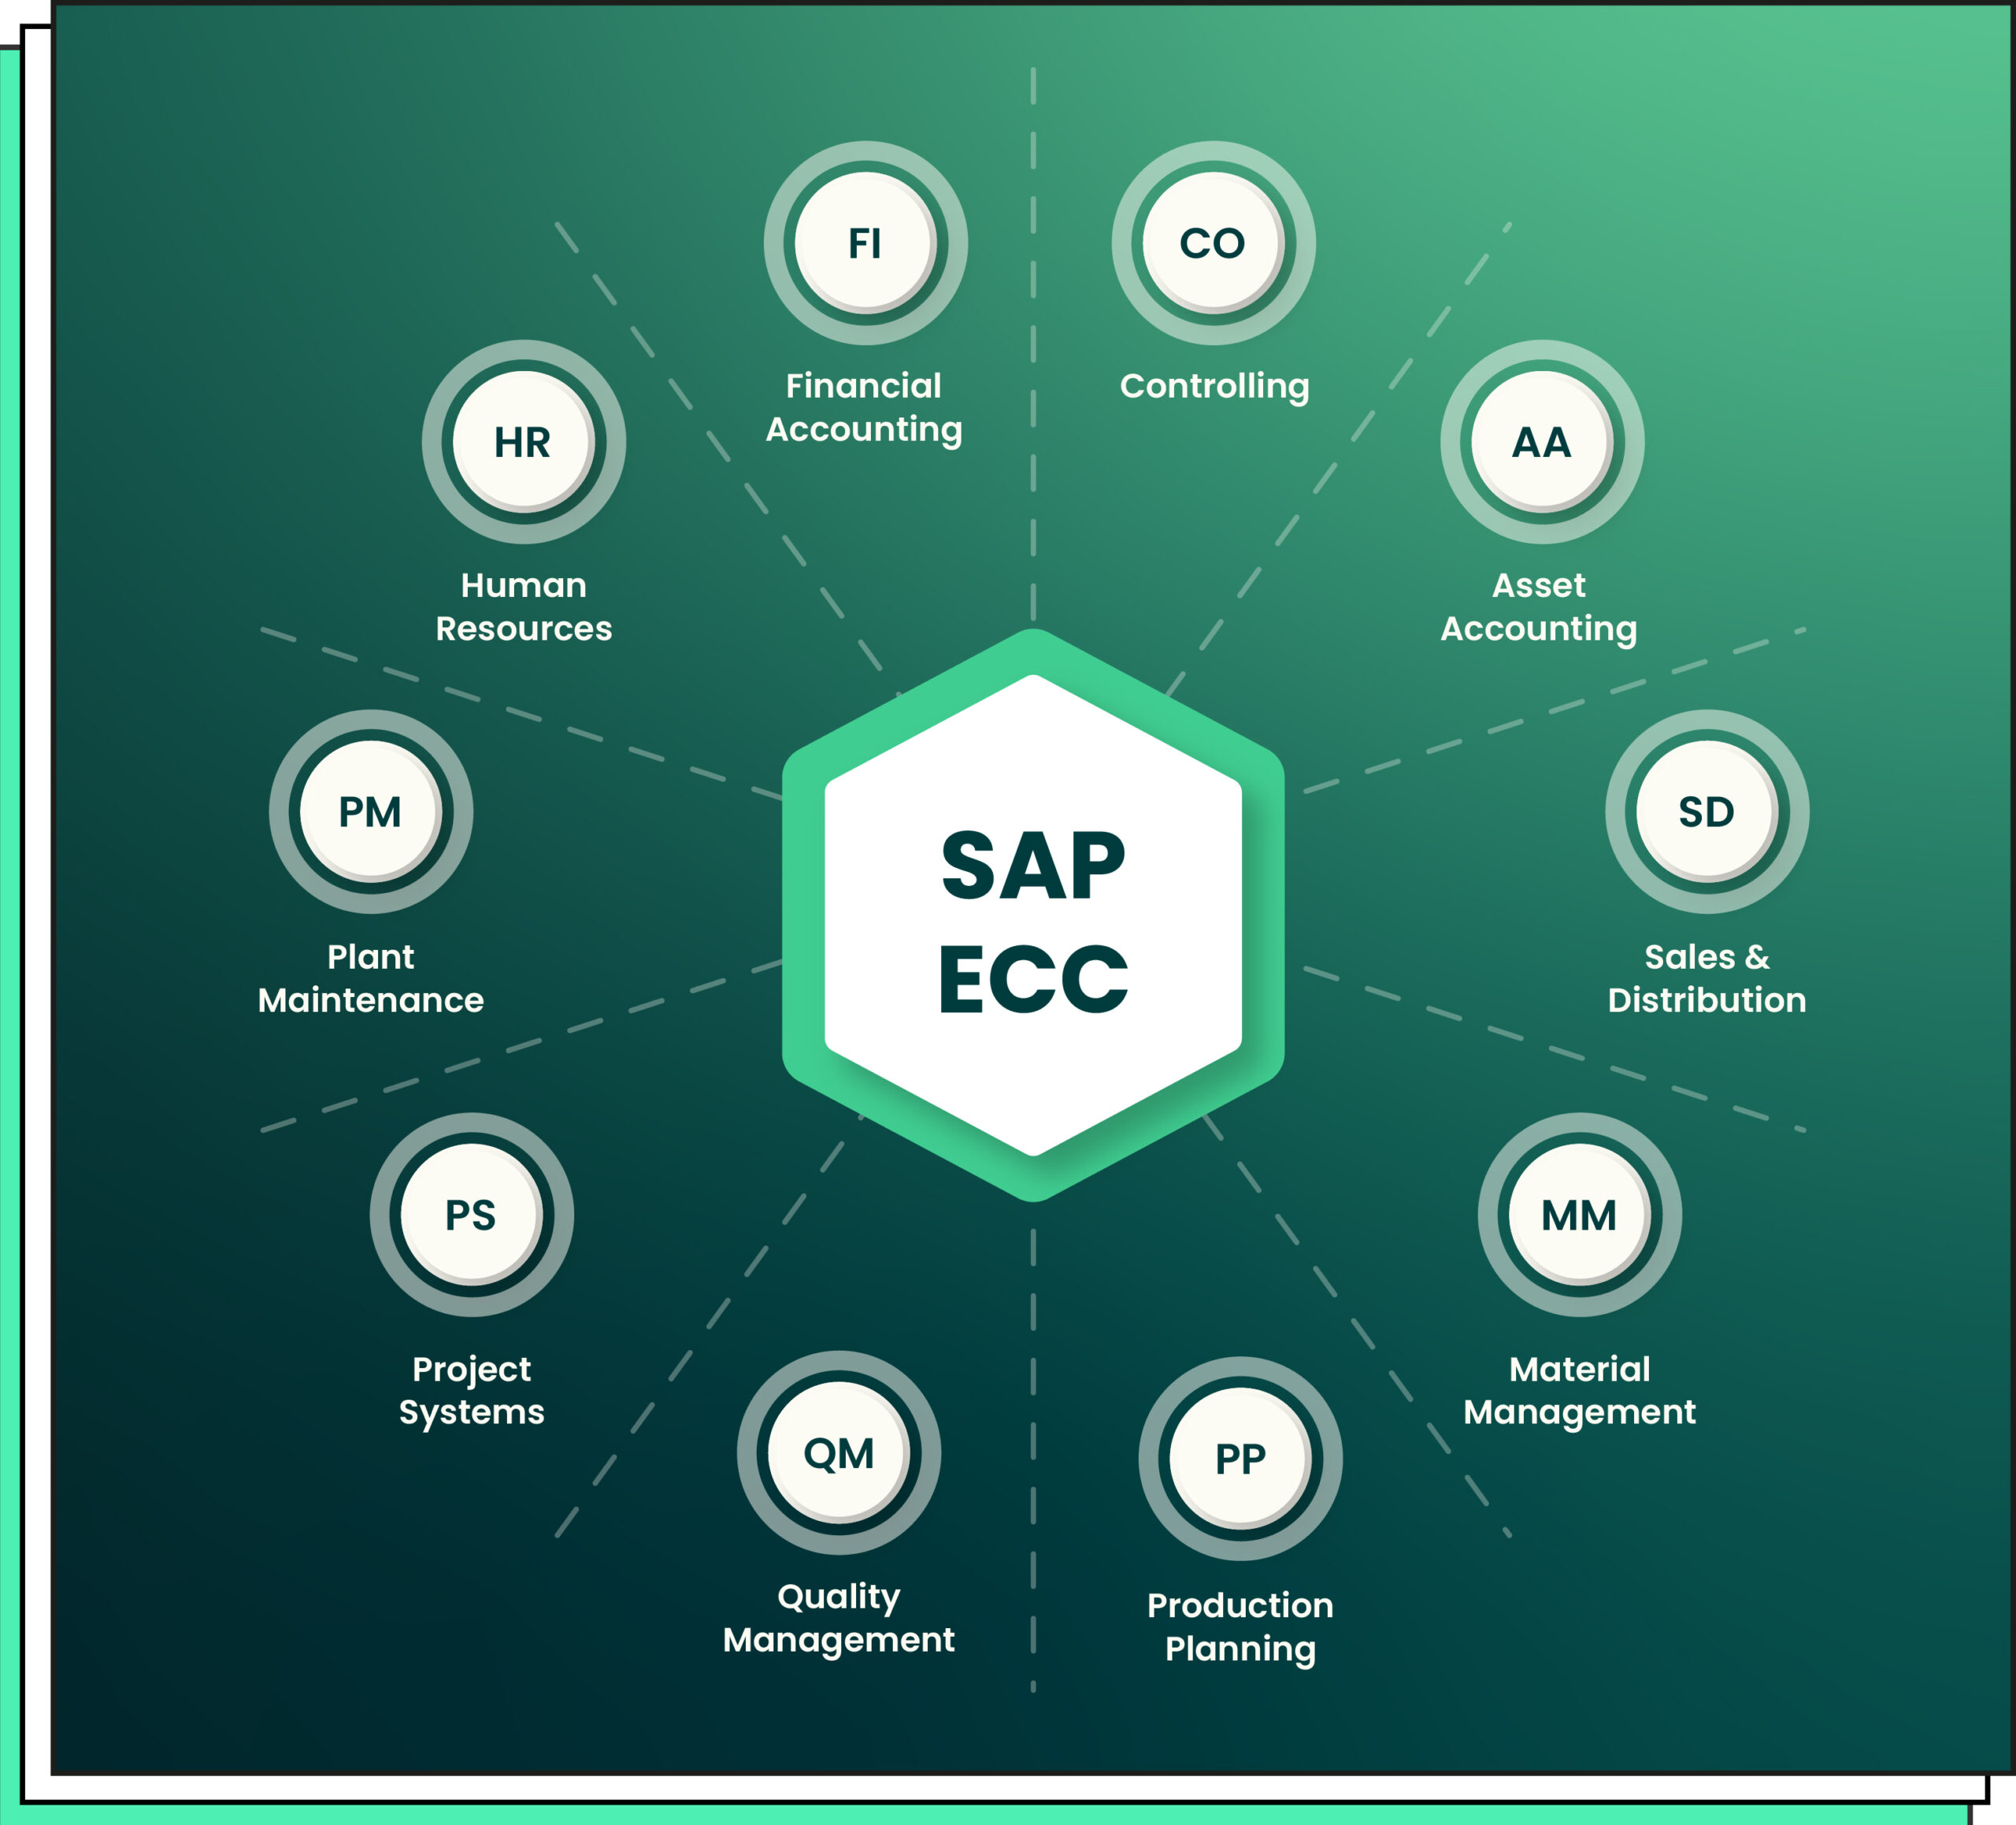 Structure of SAP ECC